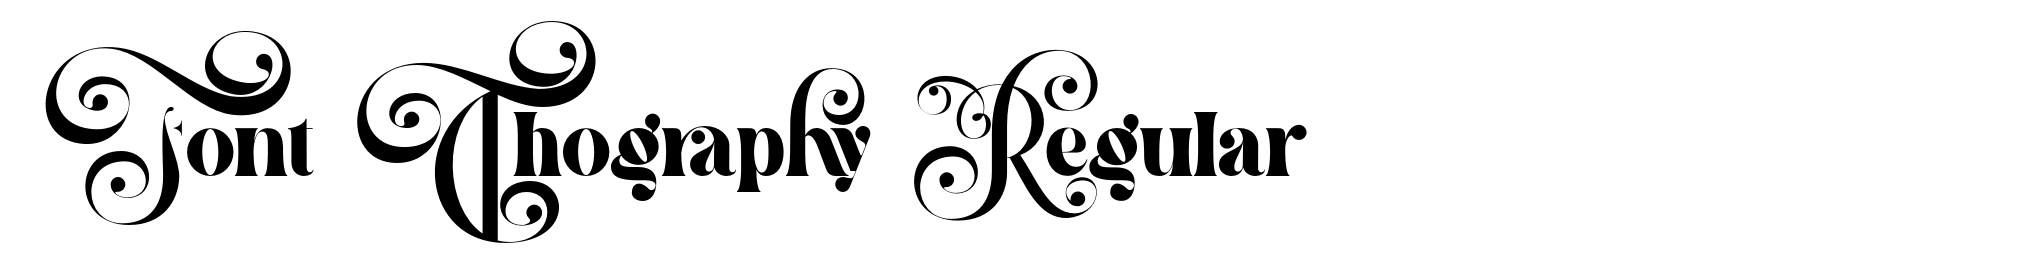 Font Thography Regular image